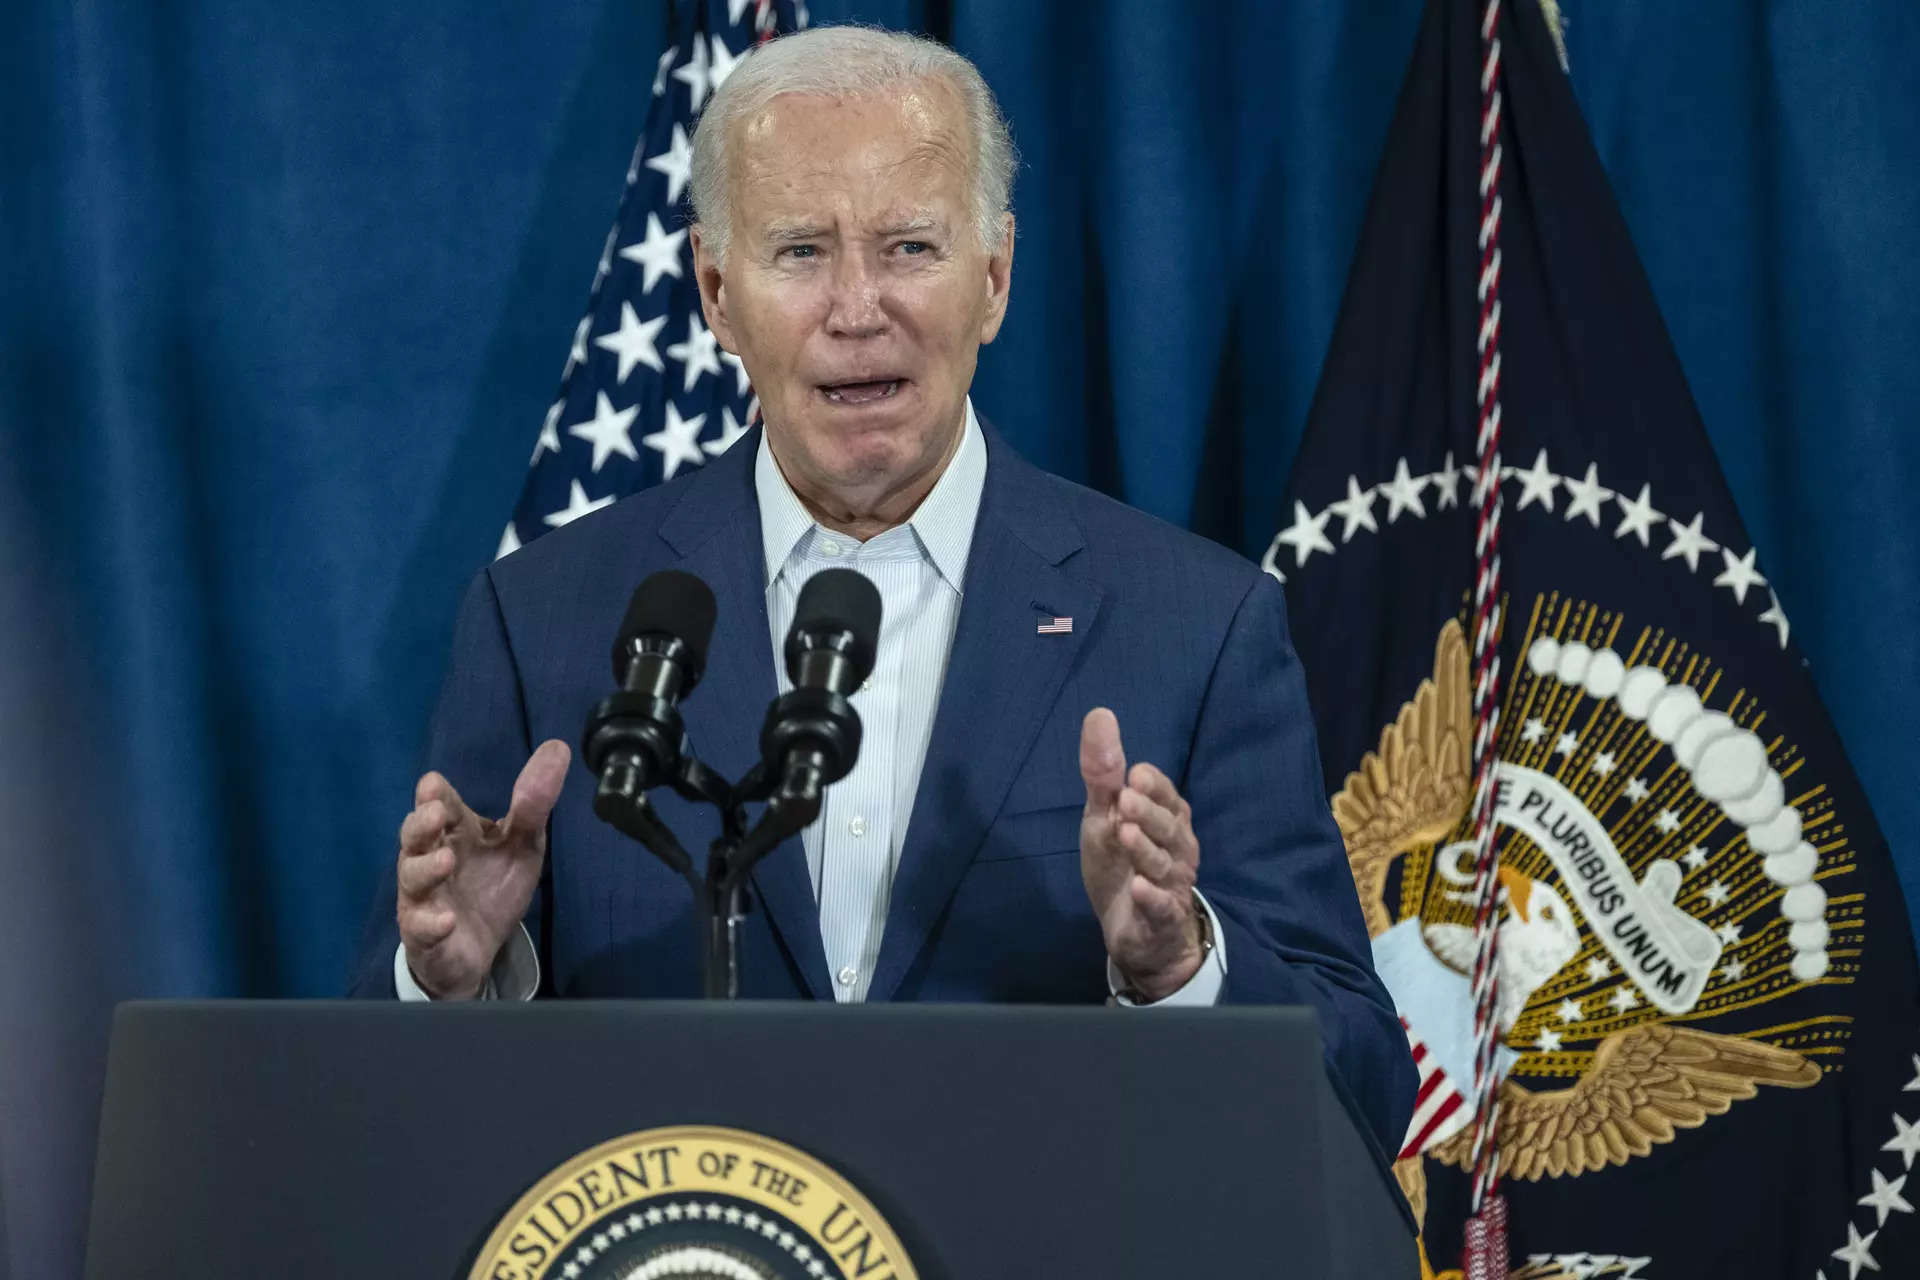 Joe Biden campaign to resume advertising this week after Trump shooting 